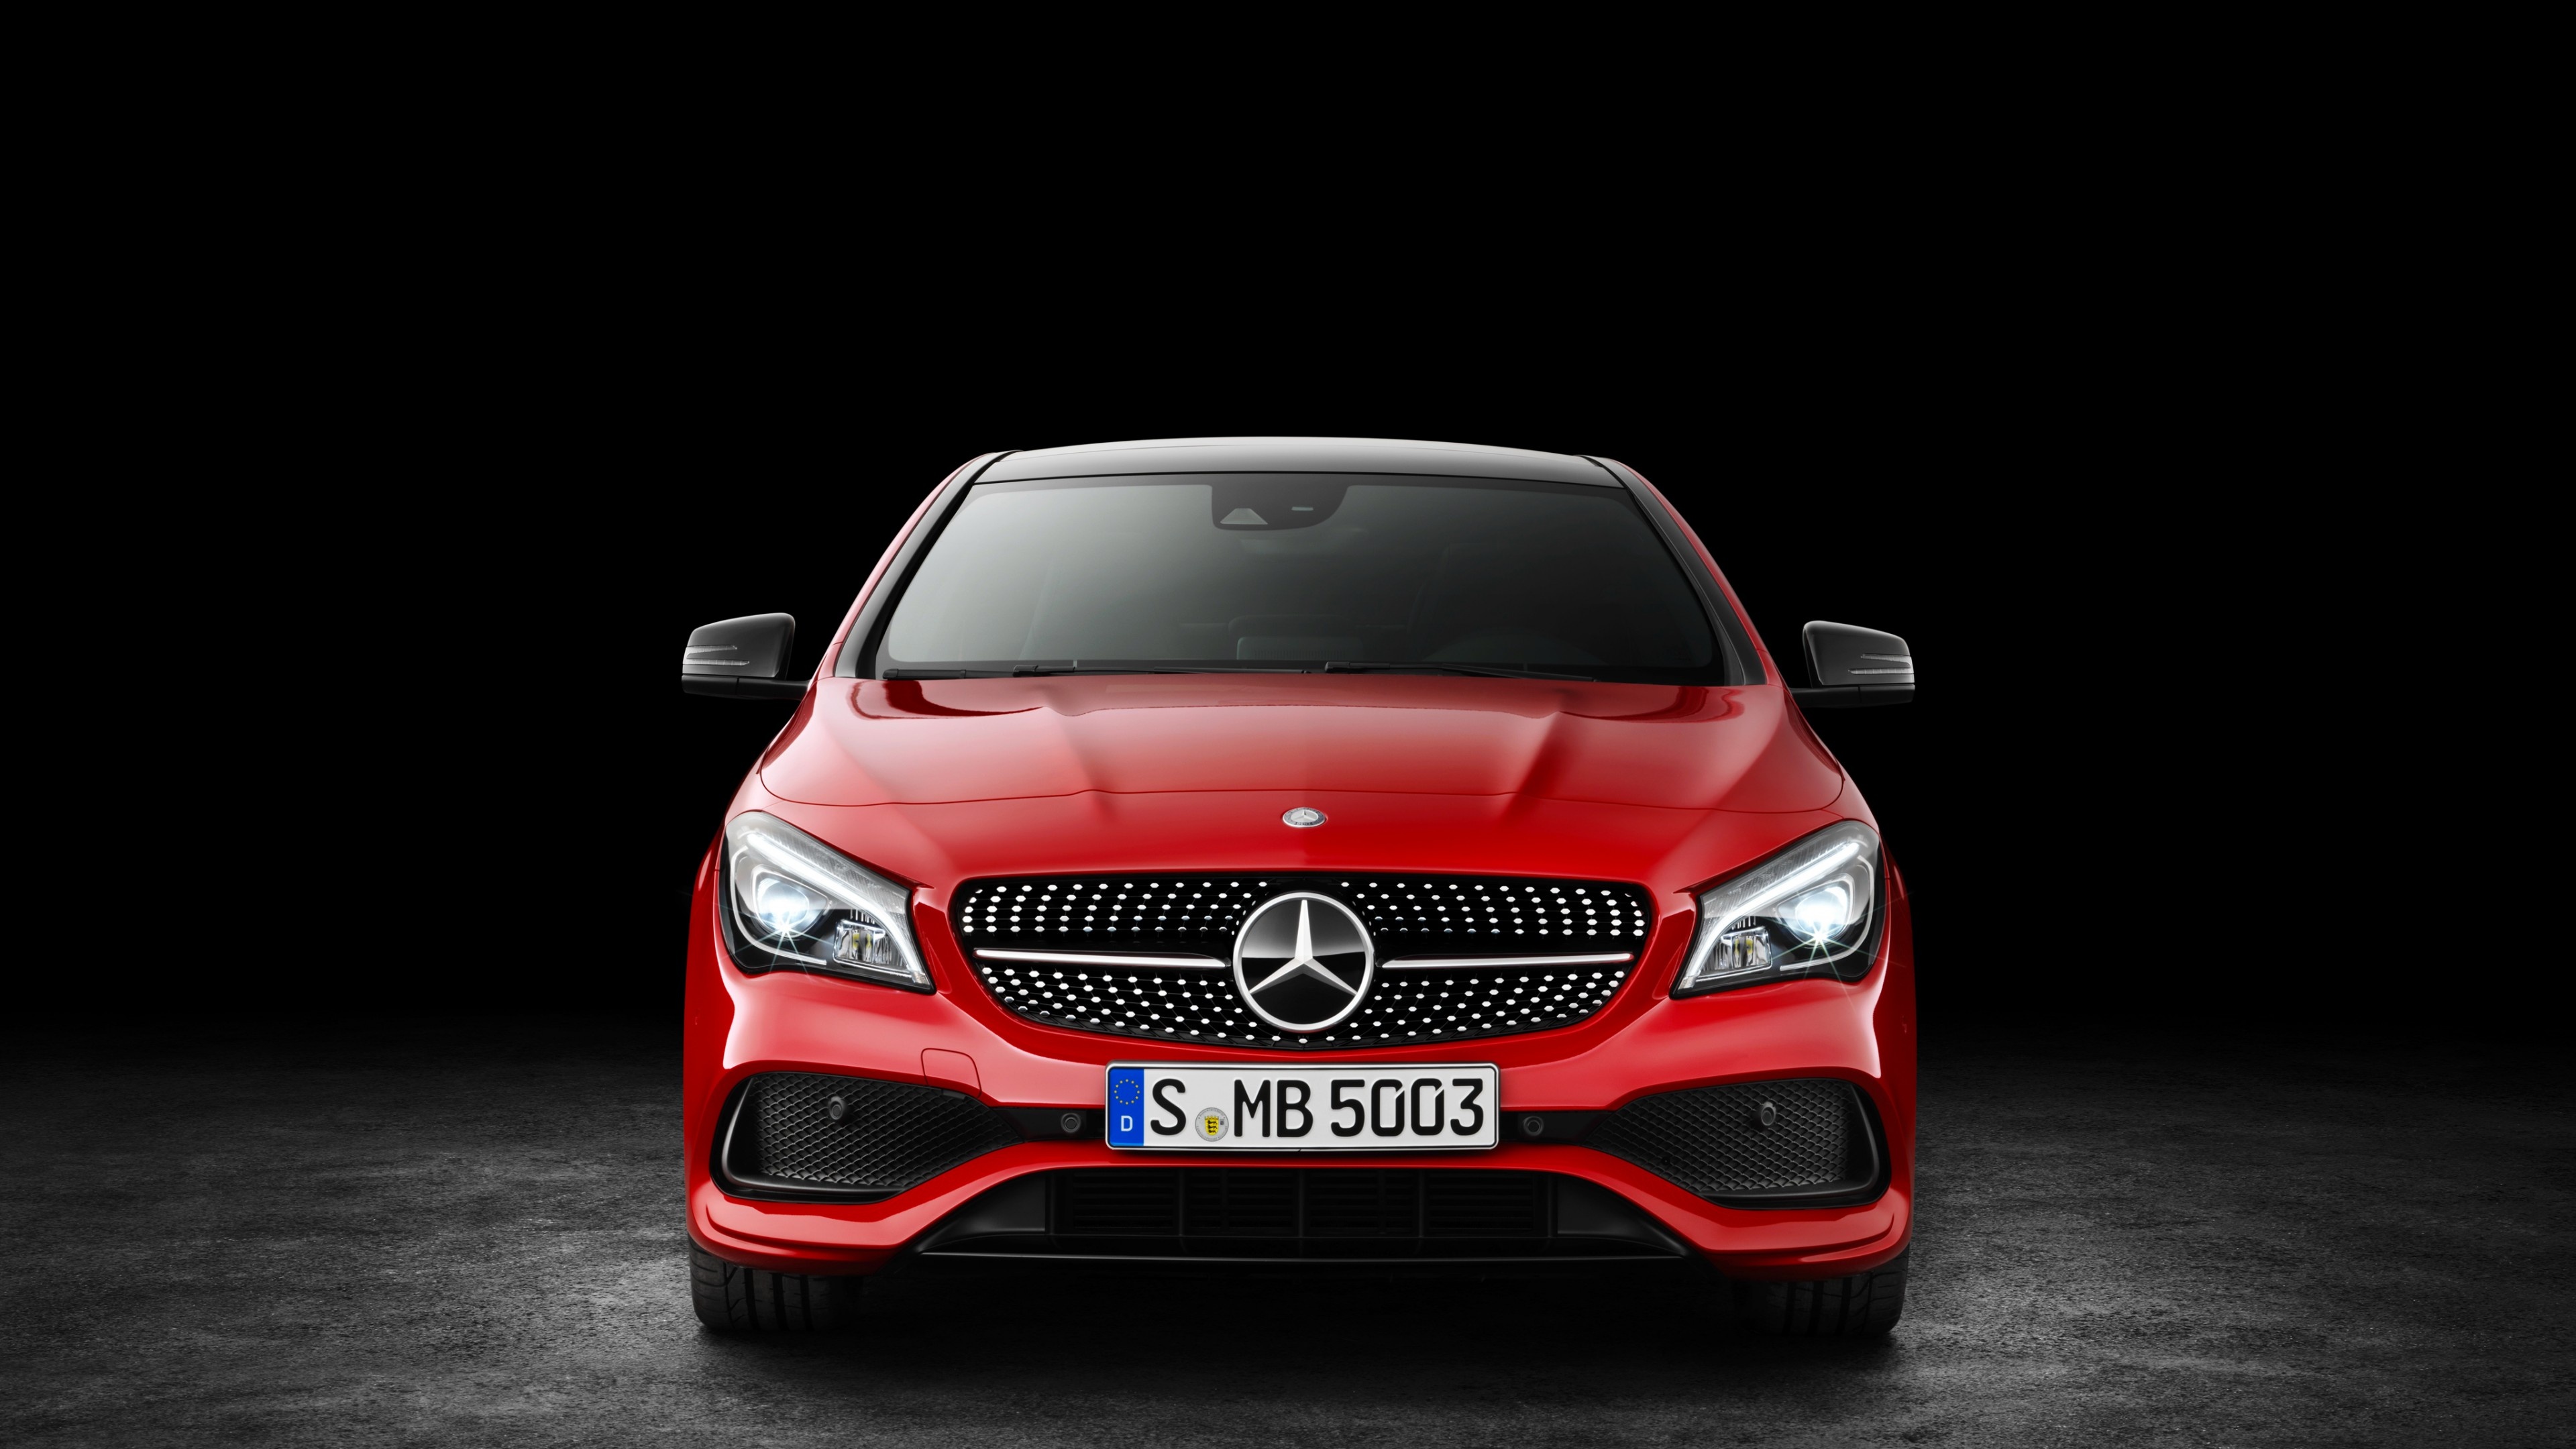 Mercedes-Benz CLA 200 d 4MATIC AMG Line, Luxury sedan, Stylish red exterior, Enhanced performance, 3840x2160 4K Desktop